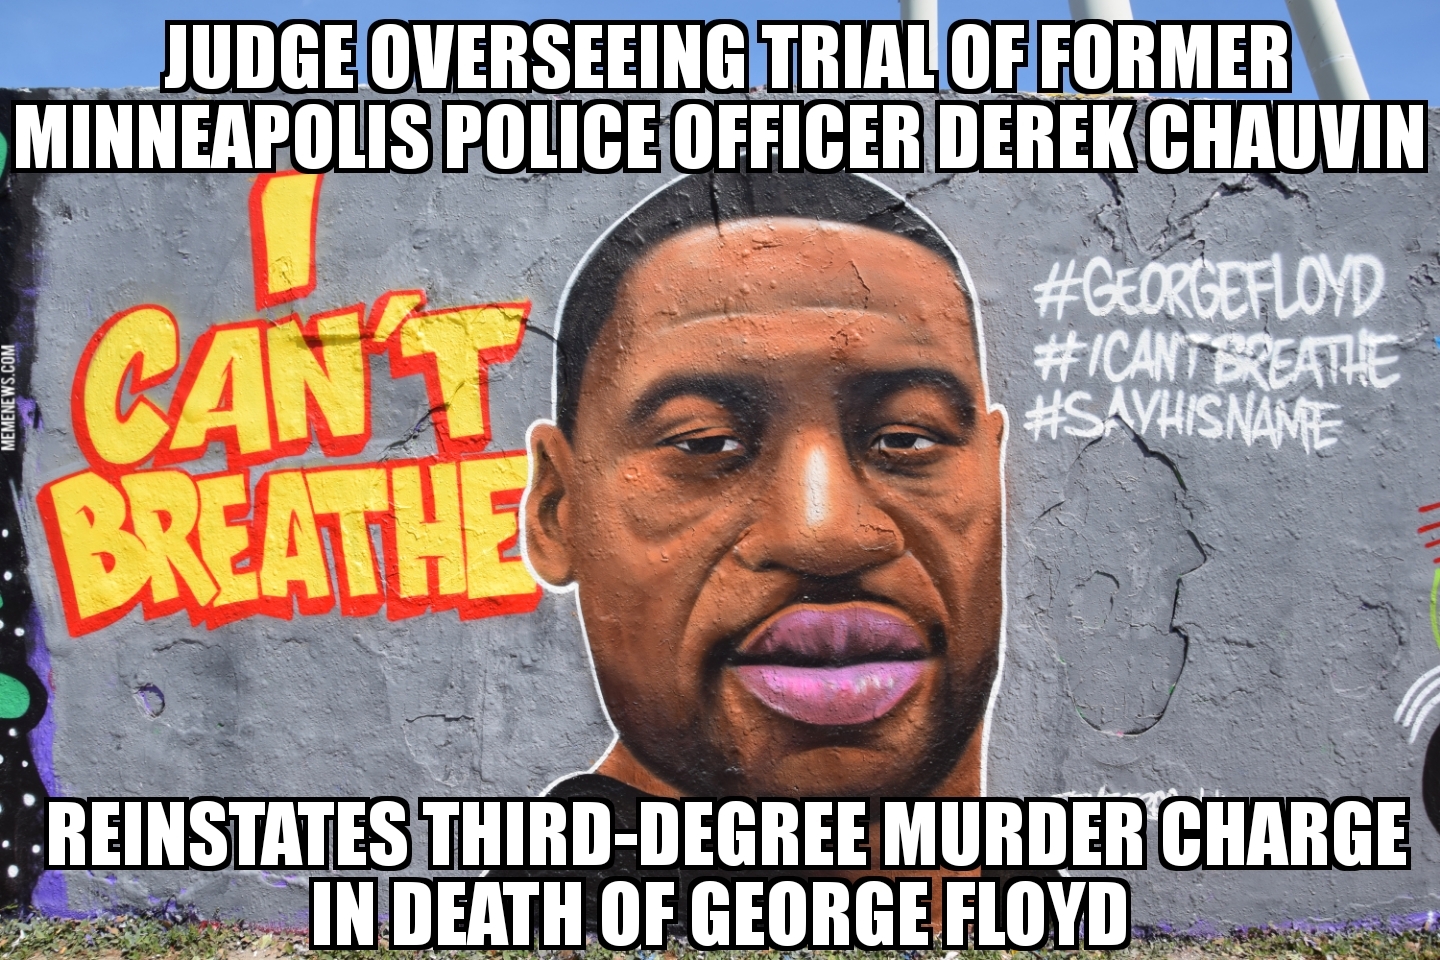 Judge reinstates murder charge in George Floyd death